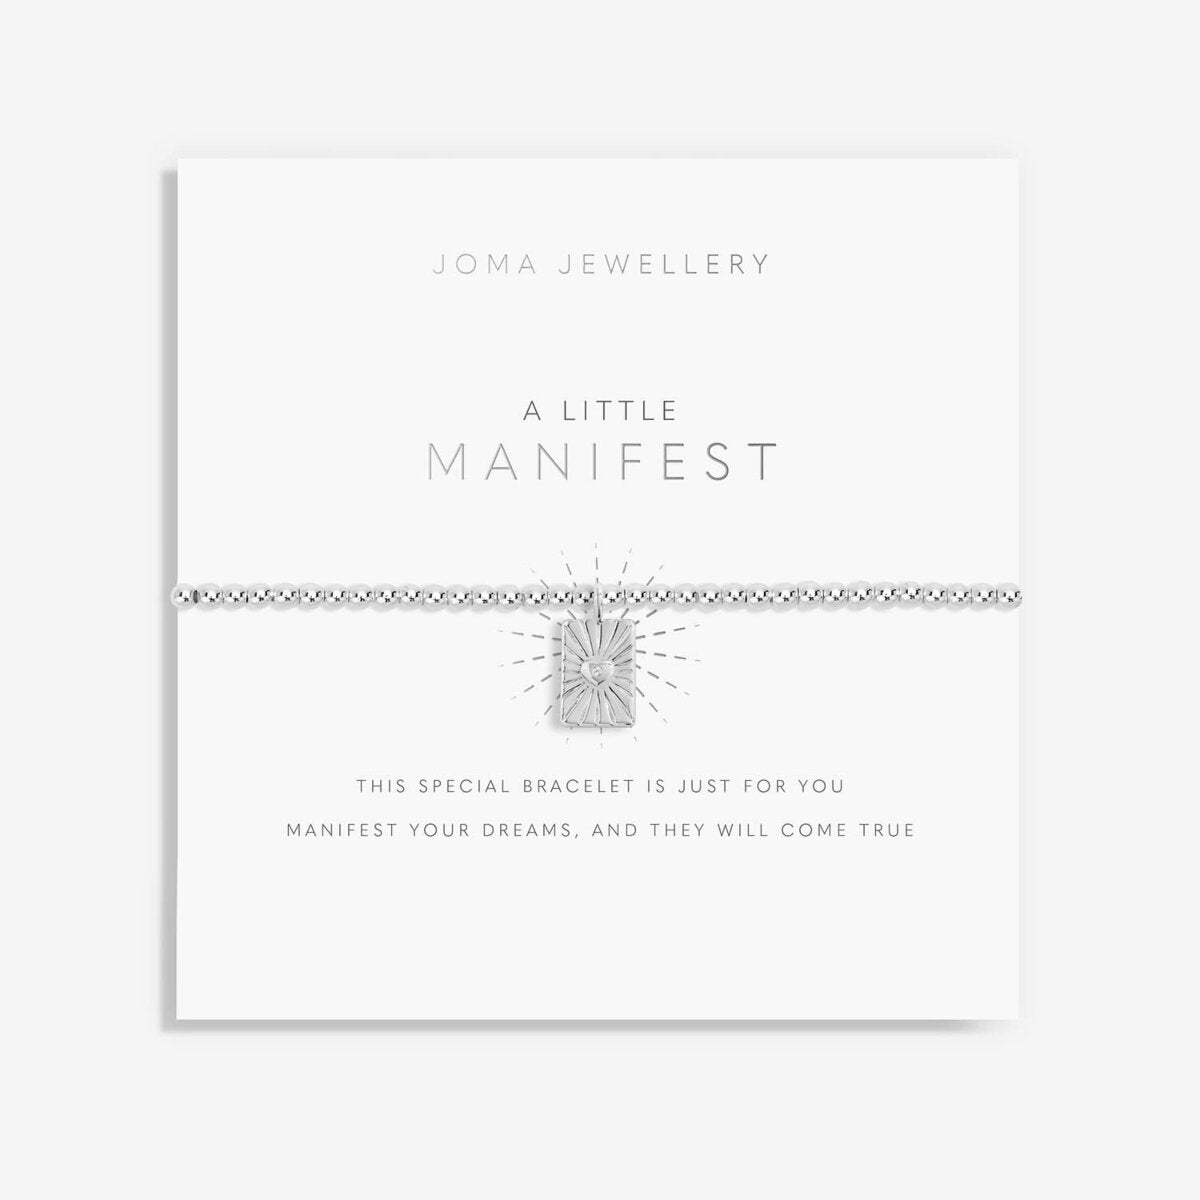 Joma Jewellery A LITTLE Manifest BRACELET